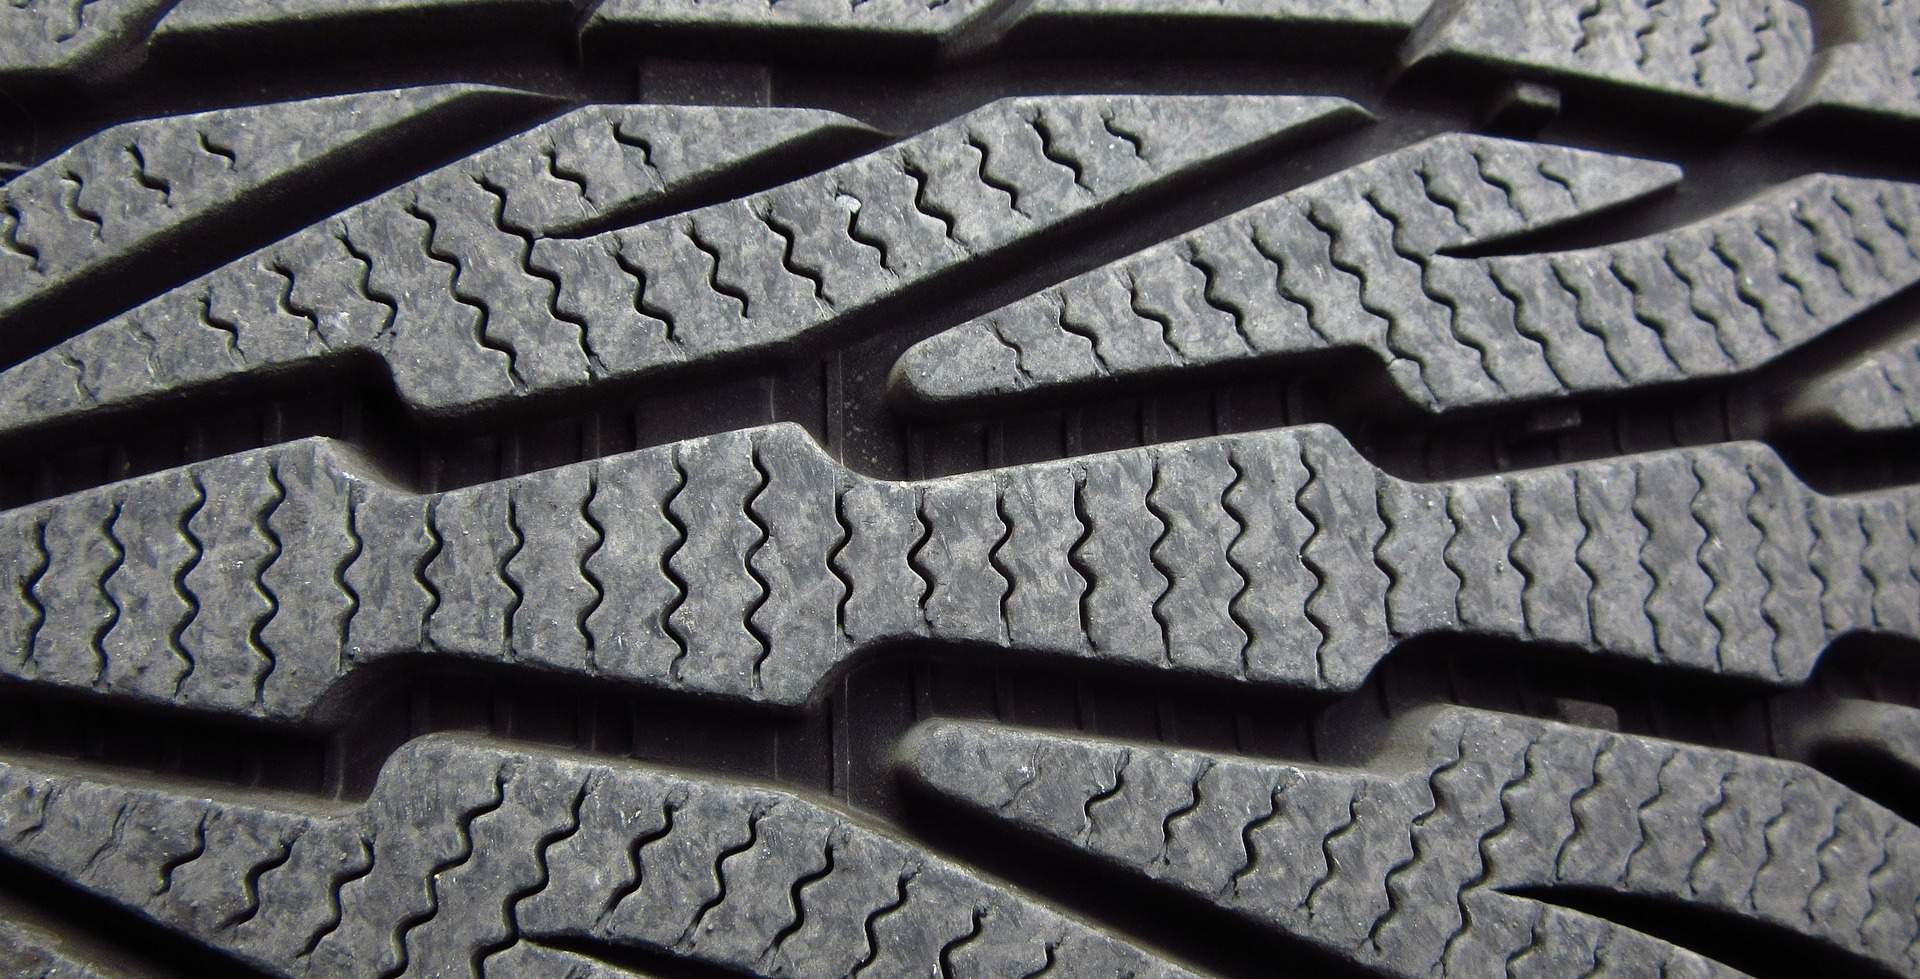 Winter Tires 1011442 1920